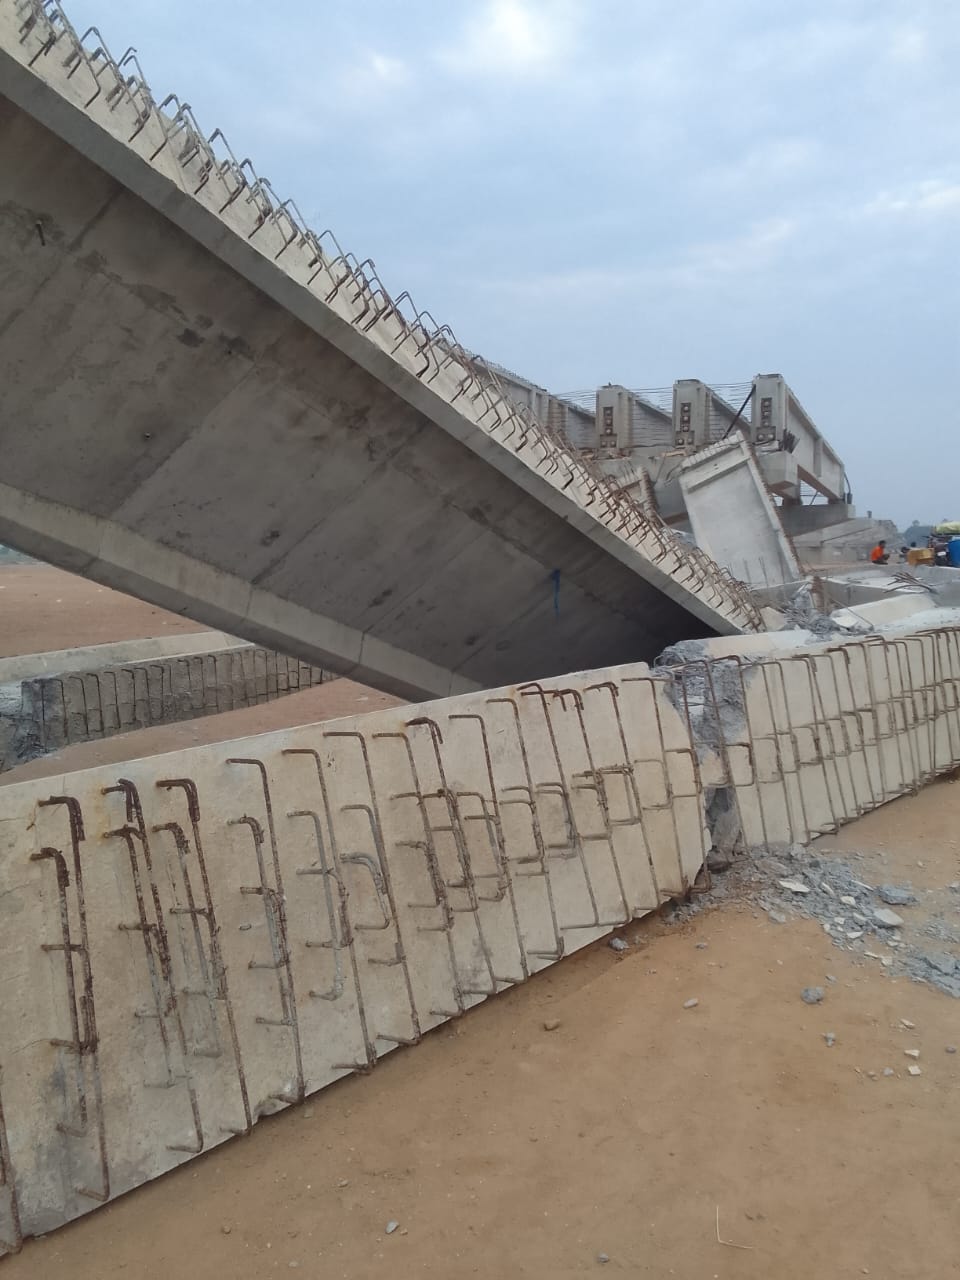 Girders of bridge being built on Maneru River collapse, none hurt